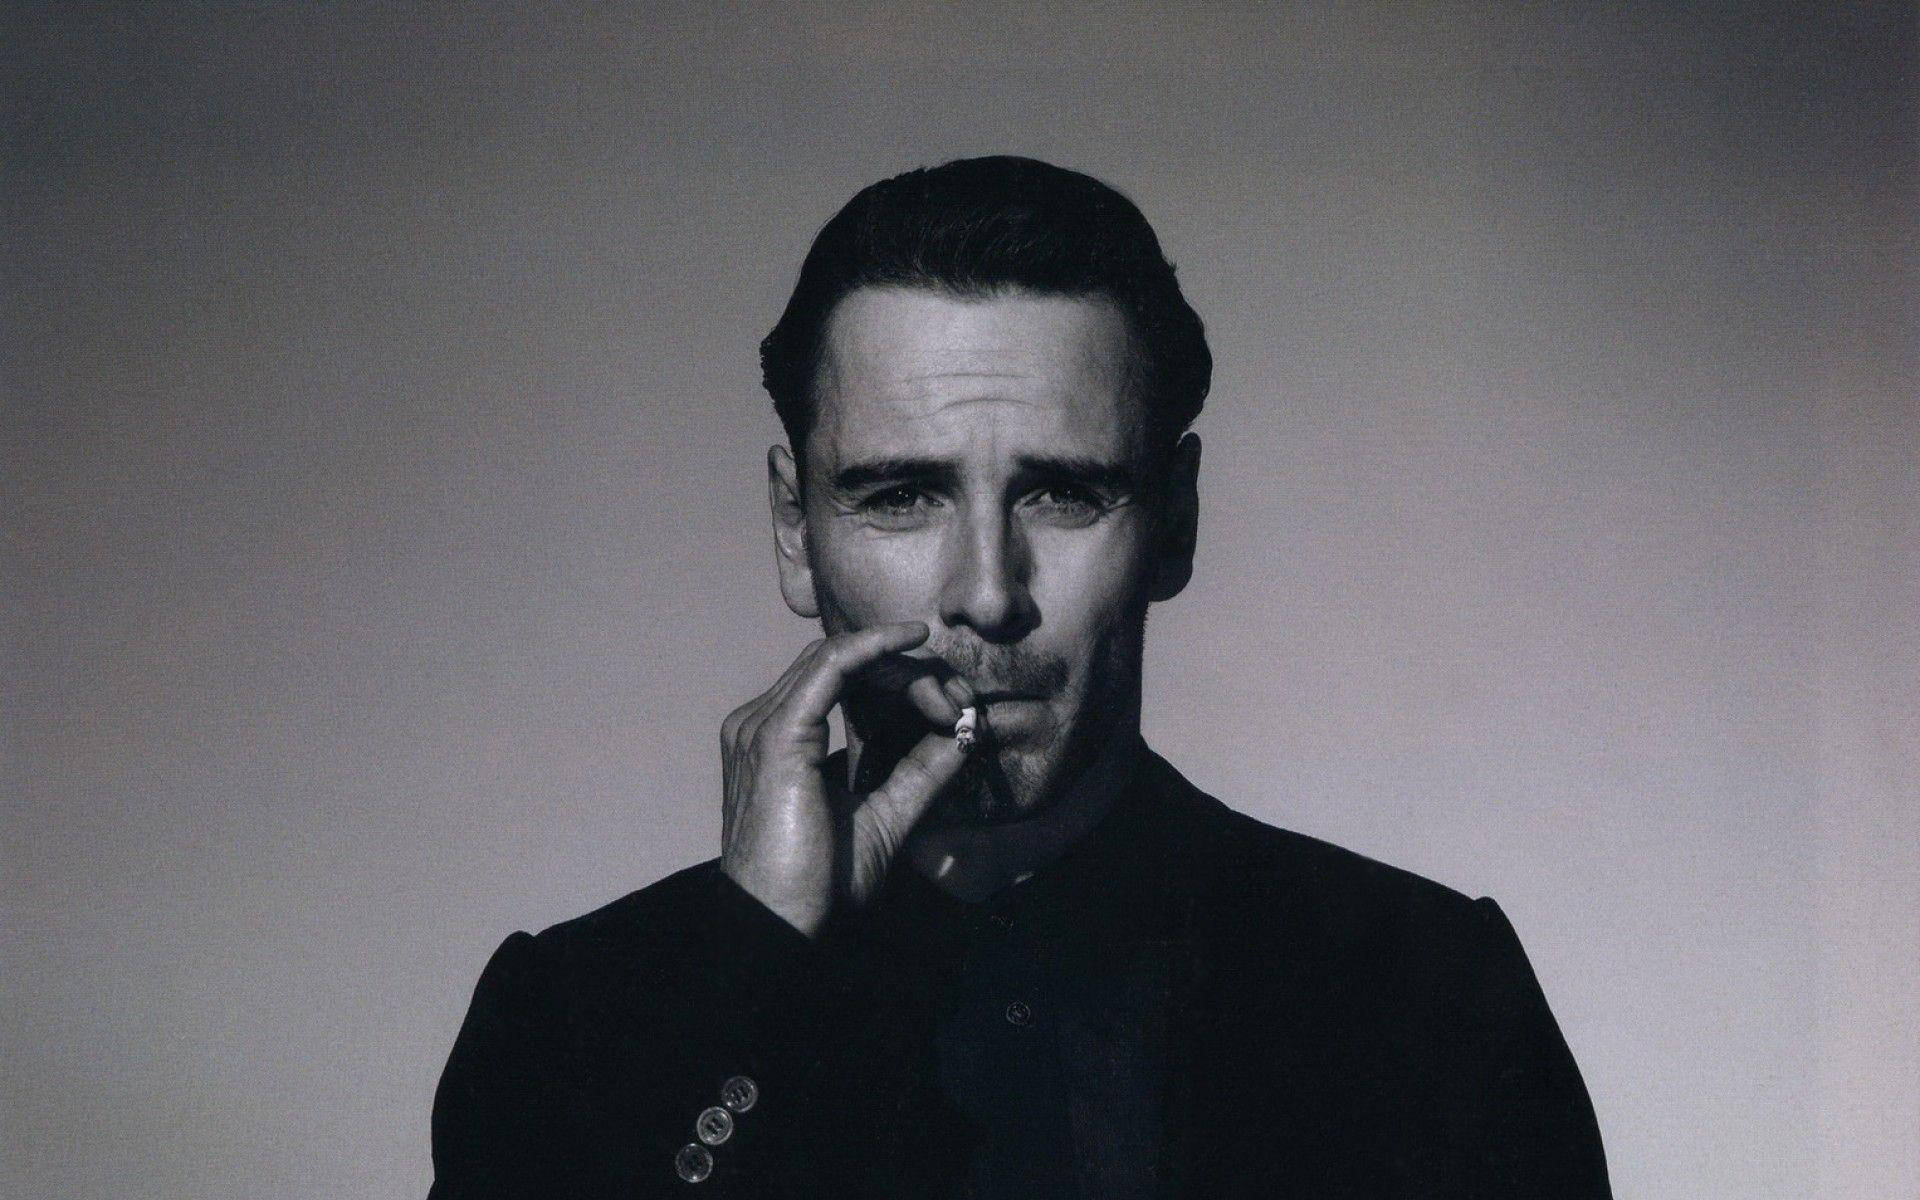 Michael Fassbender Smoking A Cigarette Background